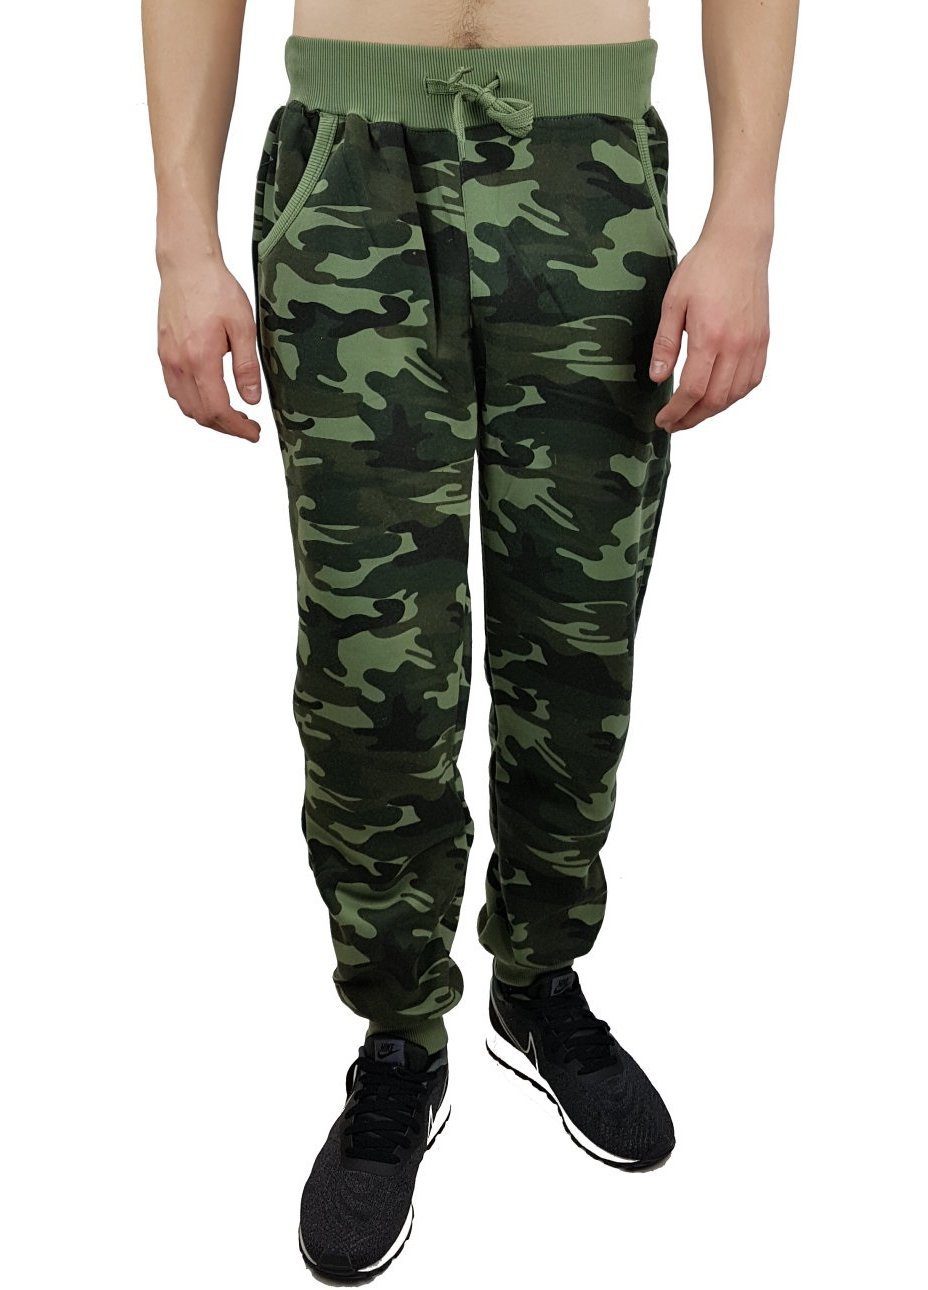 Boy Freizeithose, Jogginghose, H1002 Jogginghose Fashion Camouflage, Army